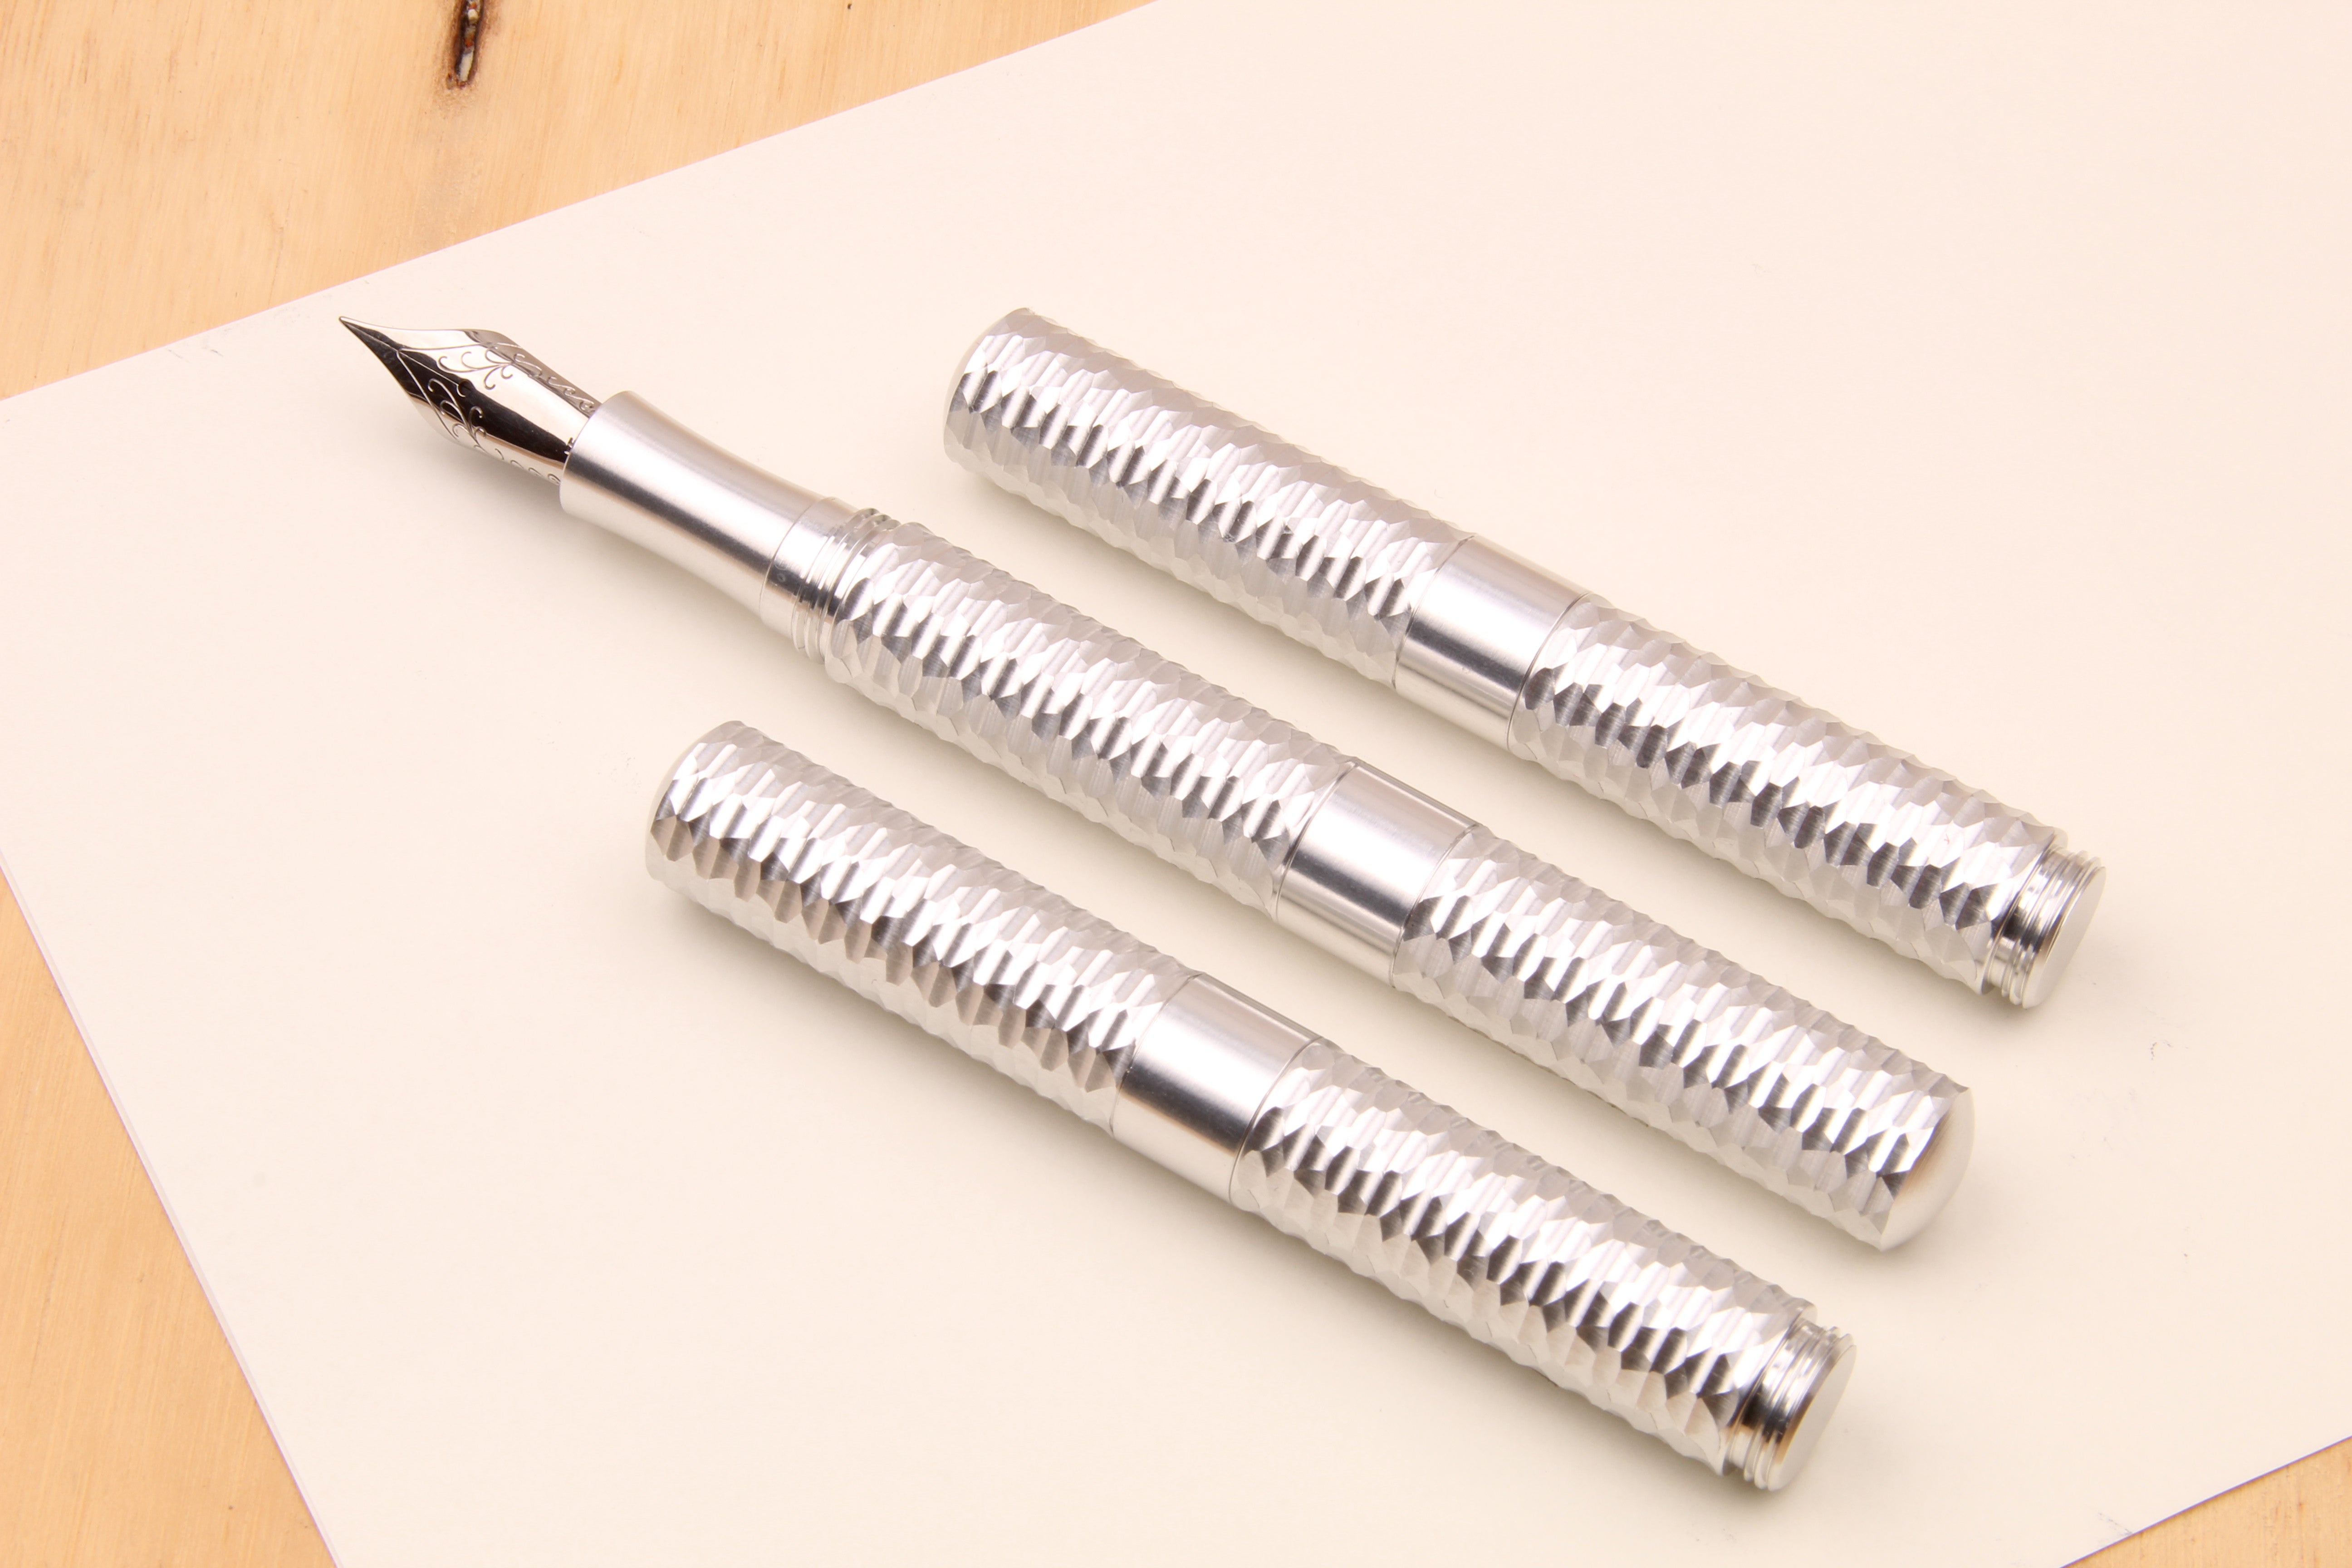 Anodized Aluminum Faceted "Pocket Six" Fountain Pen